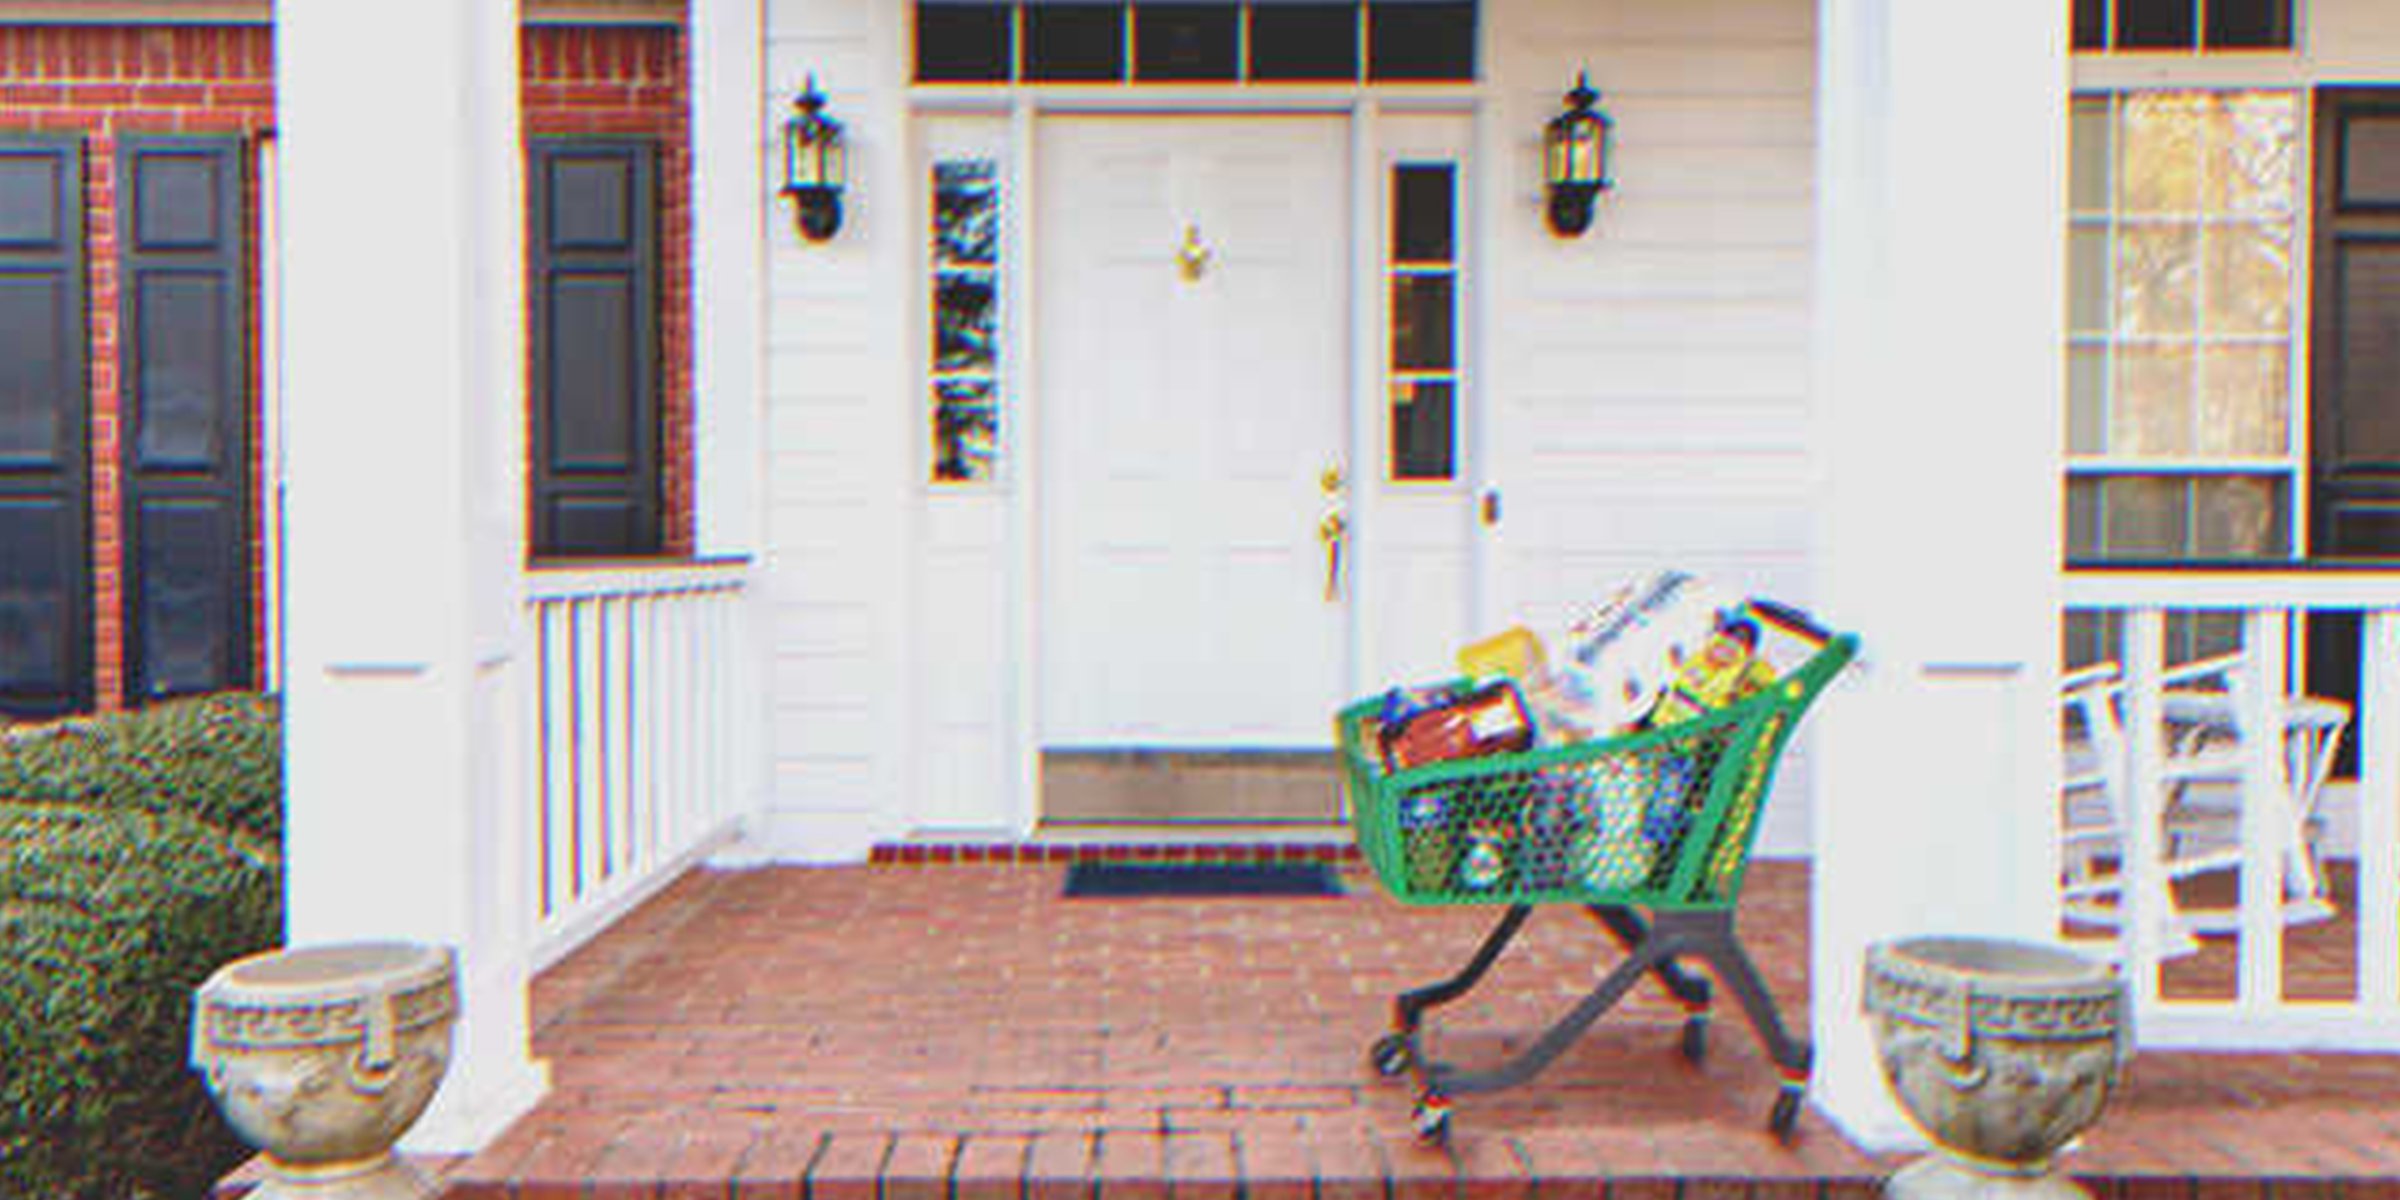 Un carrito de supermercado en la puerta de una casa | Foto: Shutterstock | Flickr.com/Polycart